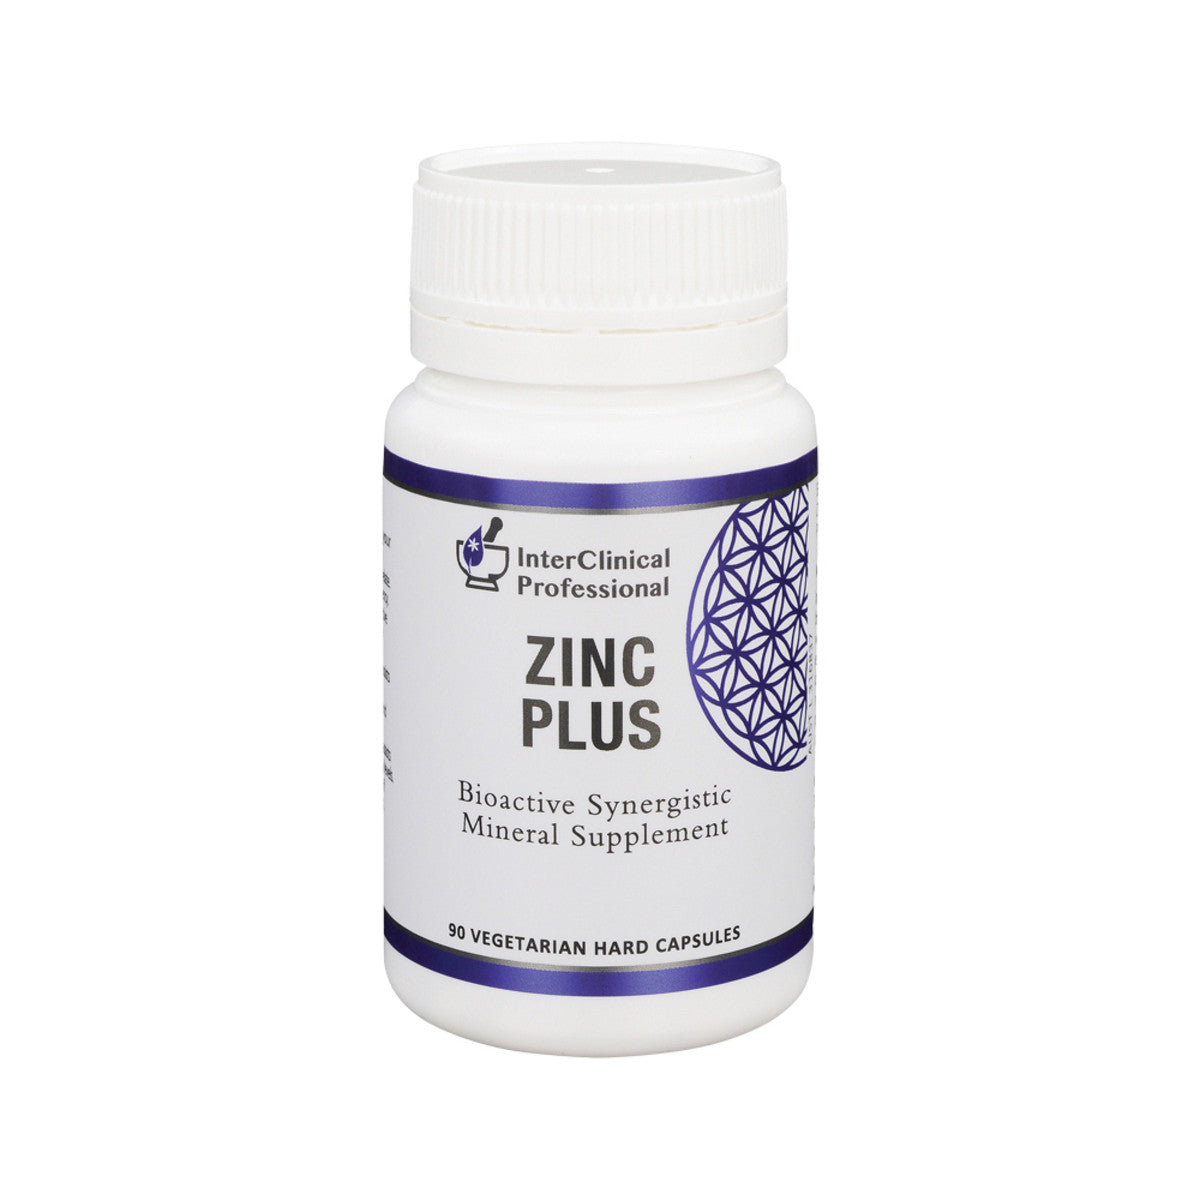 InterClinical Professional Zinc Plus